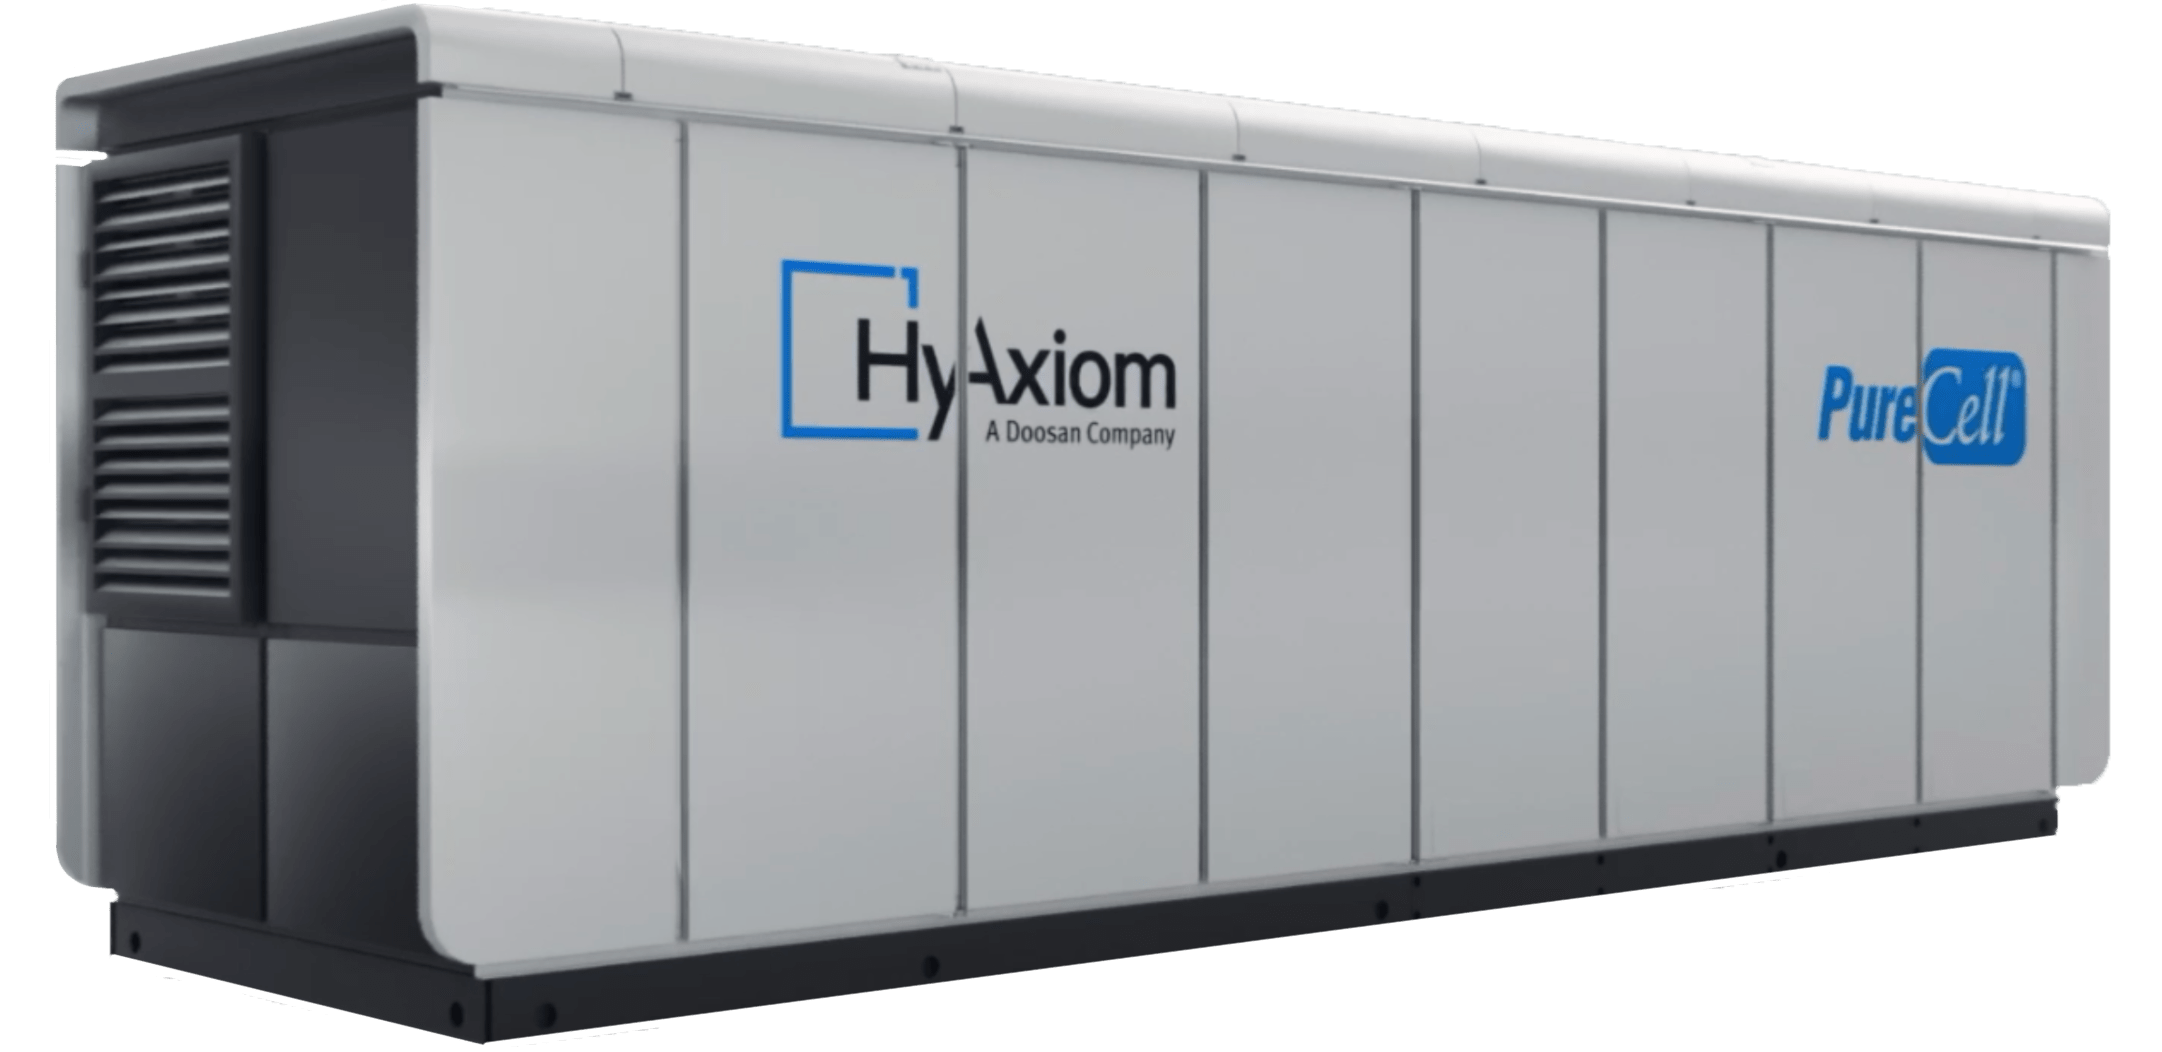 Hydrogen Fuel Cell CHP Unit (HyAxiom’s Purecell Model 400) innovative gadgets